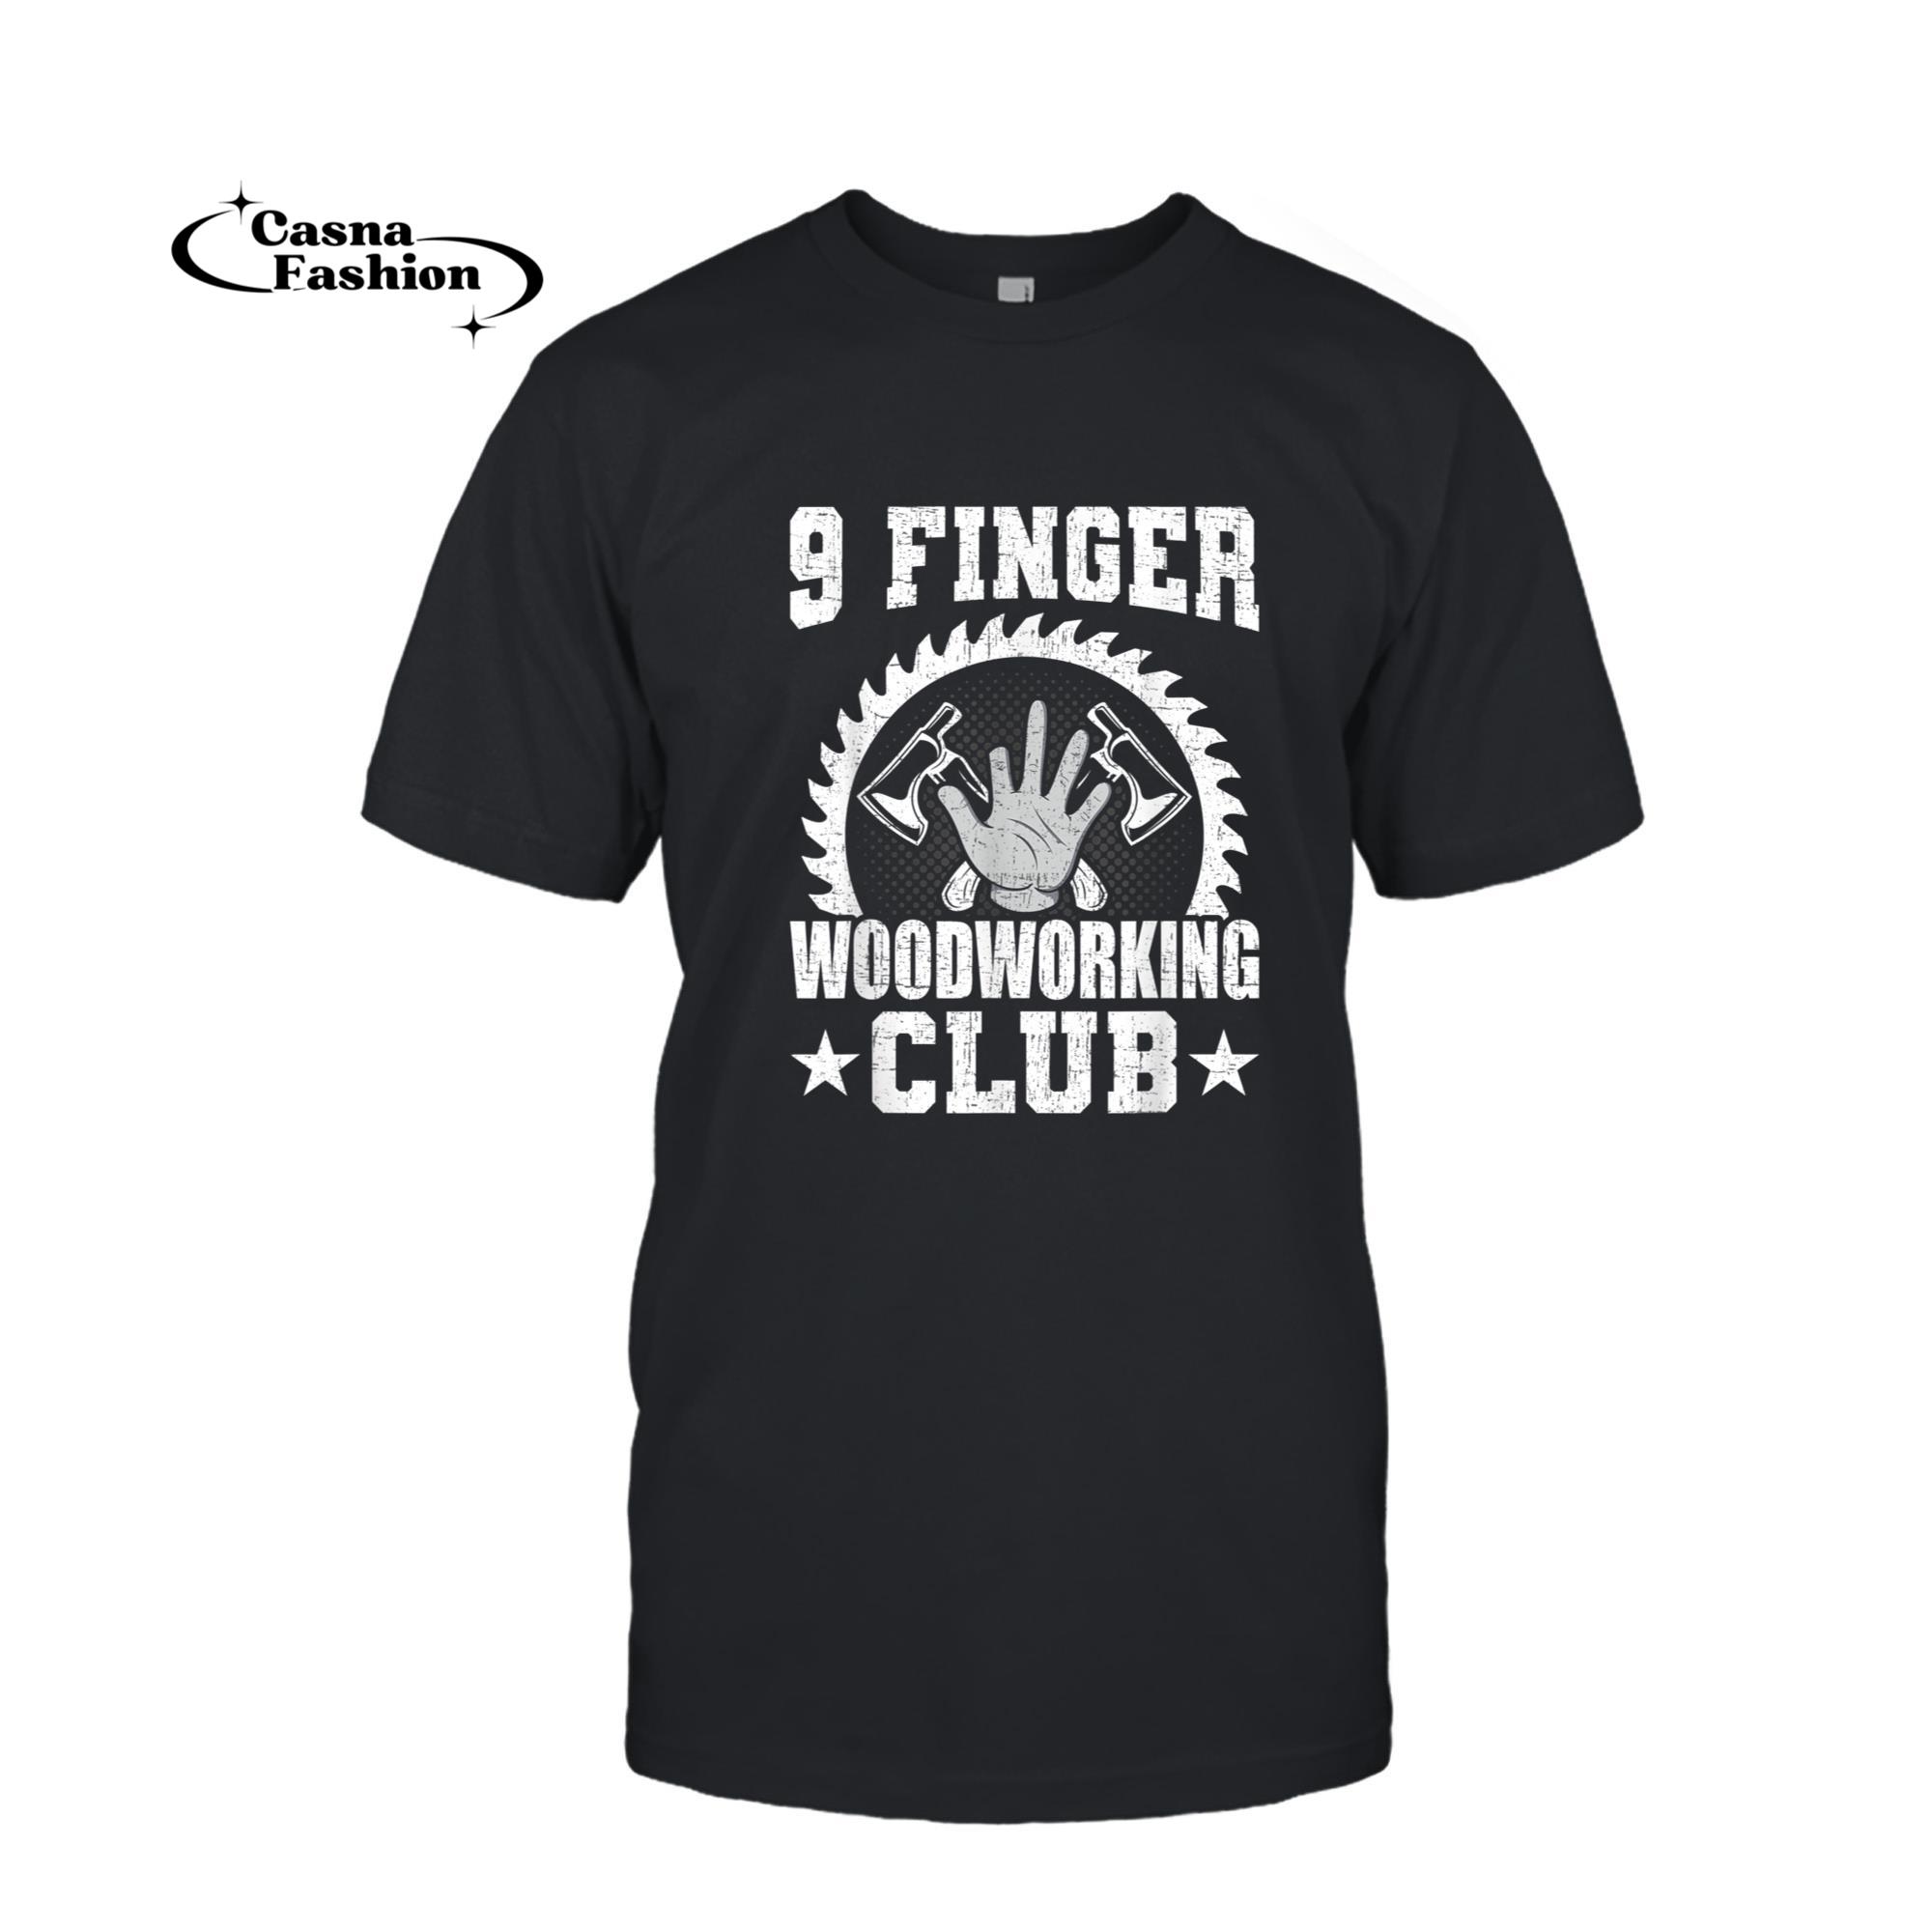 casnafashion_T-shirt_9 Finger Woodworking Club Woodworker T-Shirt_T-shirt_Black